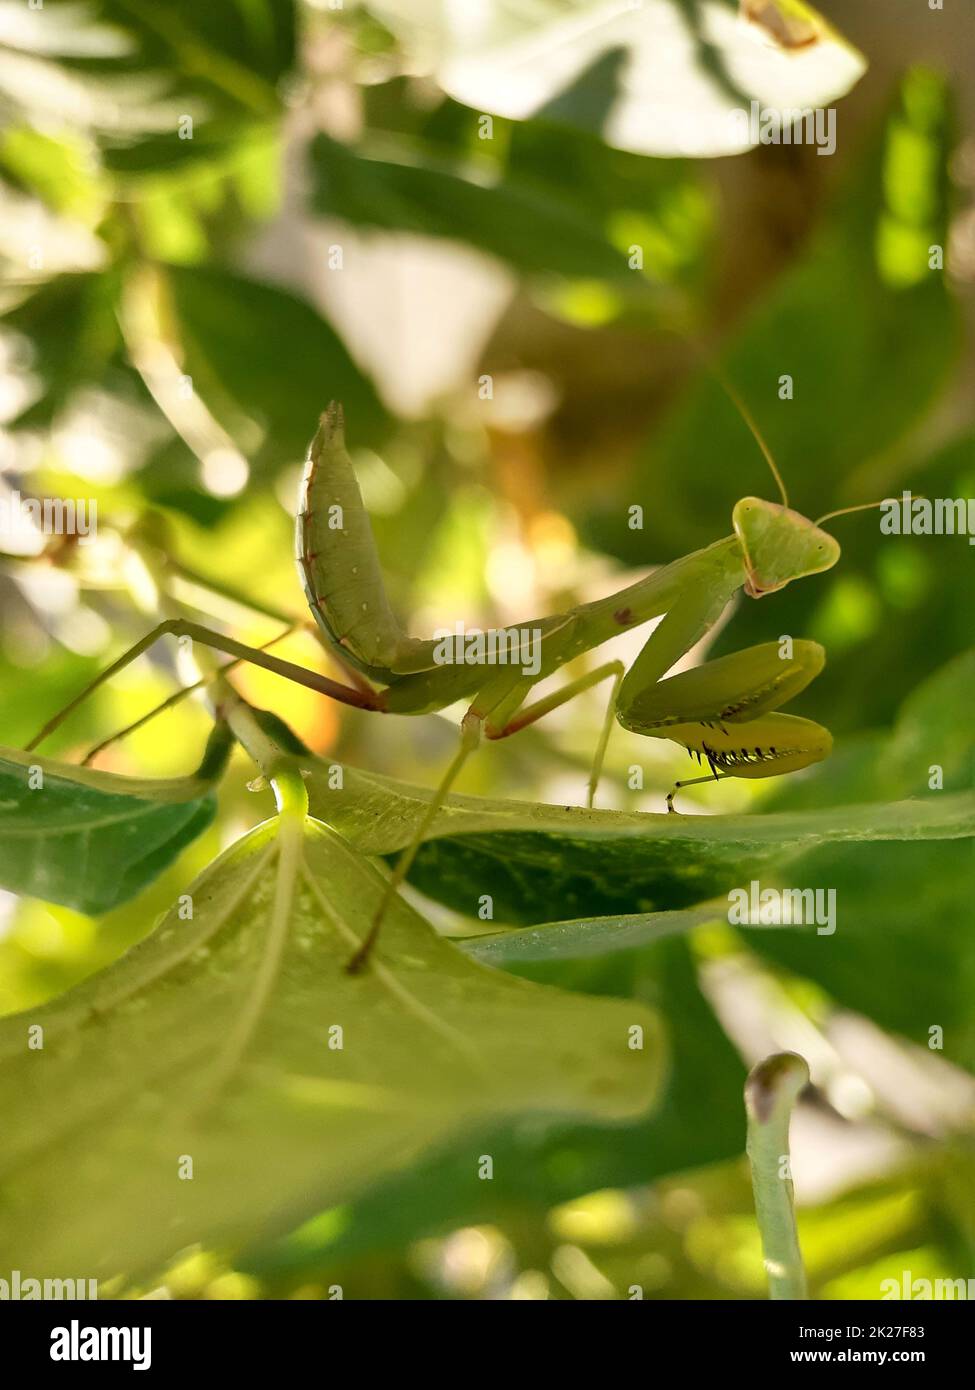 Mantis in preghiera in habitat naturale tra foglie verdi Foto Stock